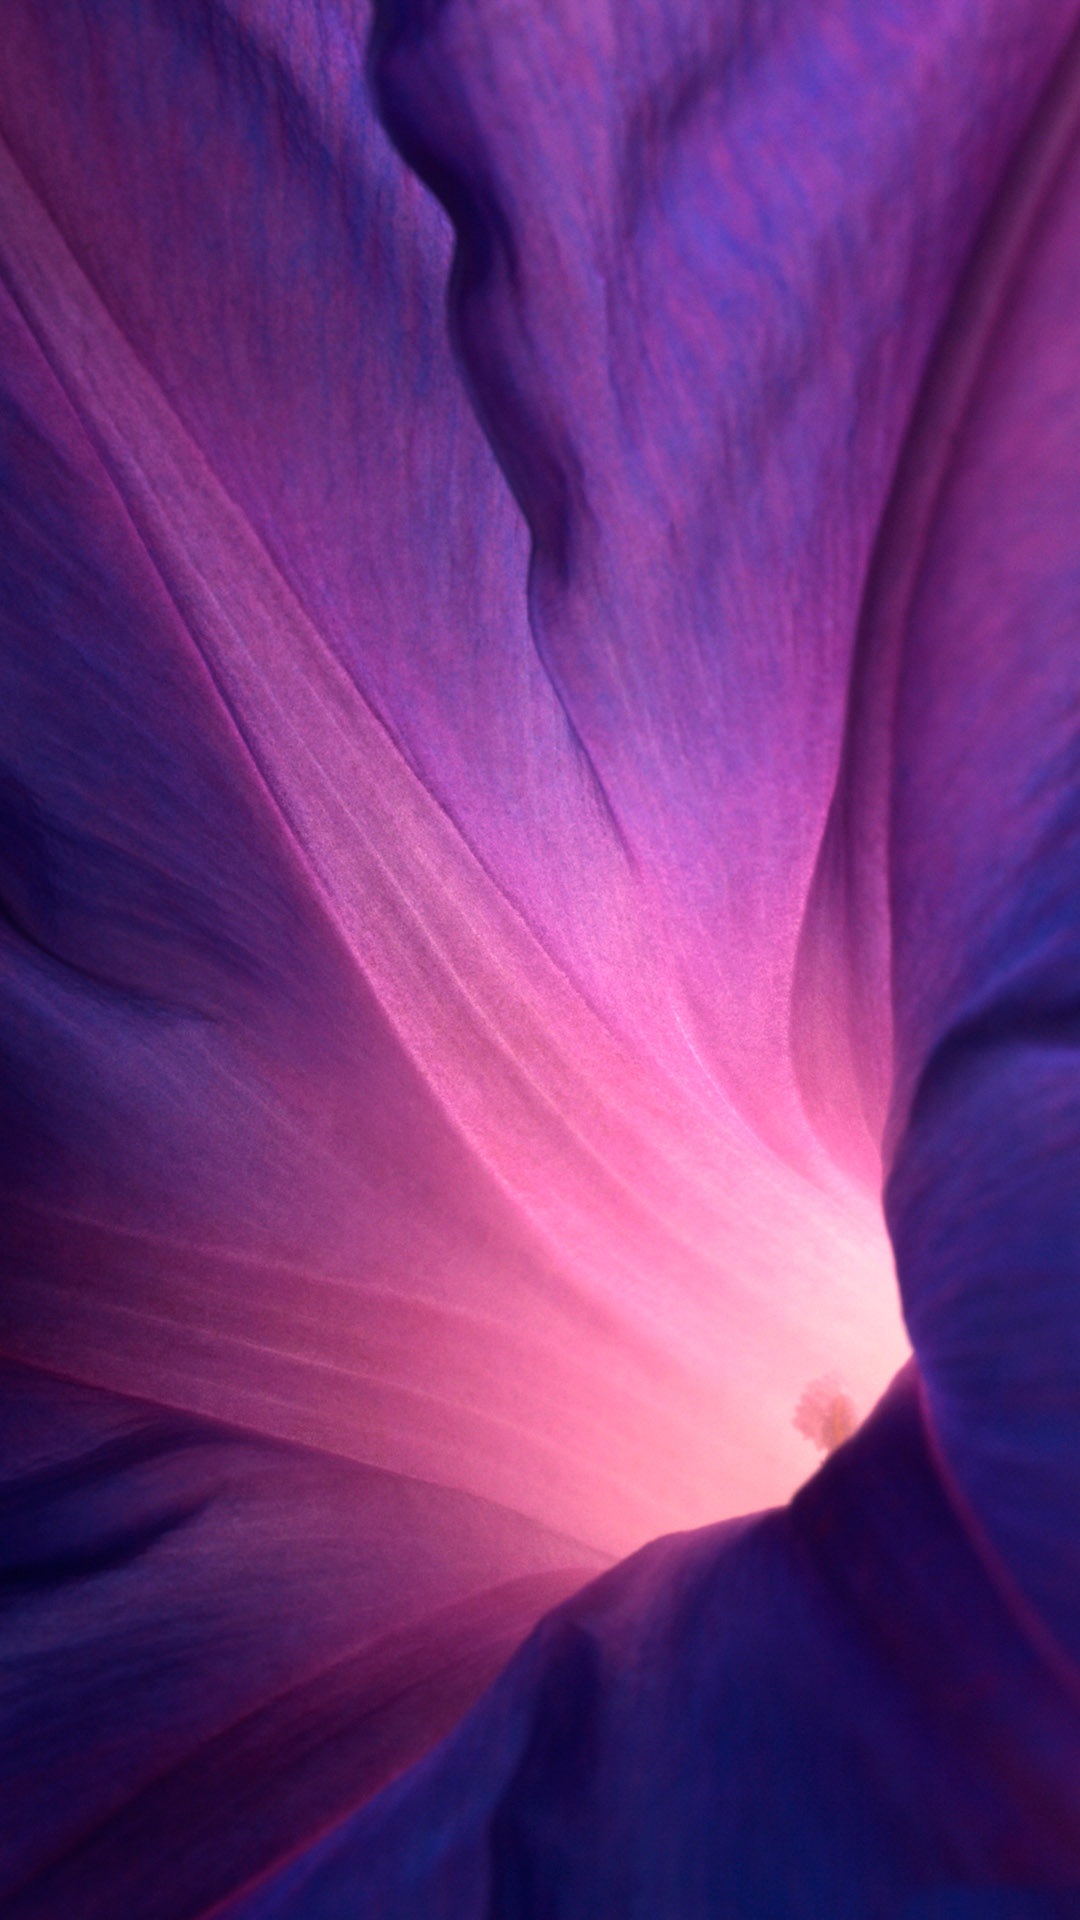 Ios Purple Flower Wallpaper Details